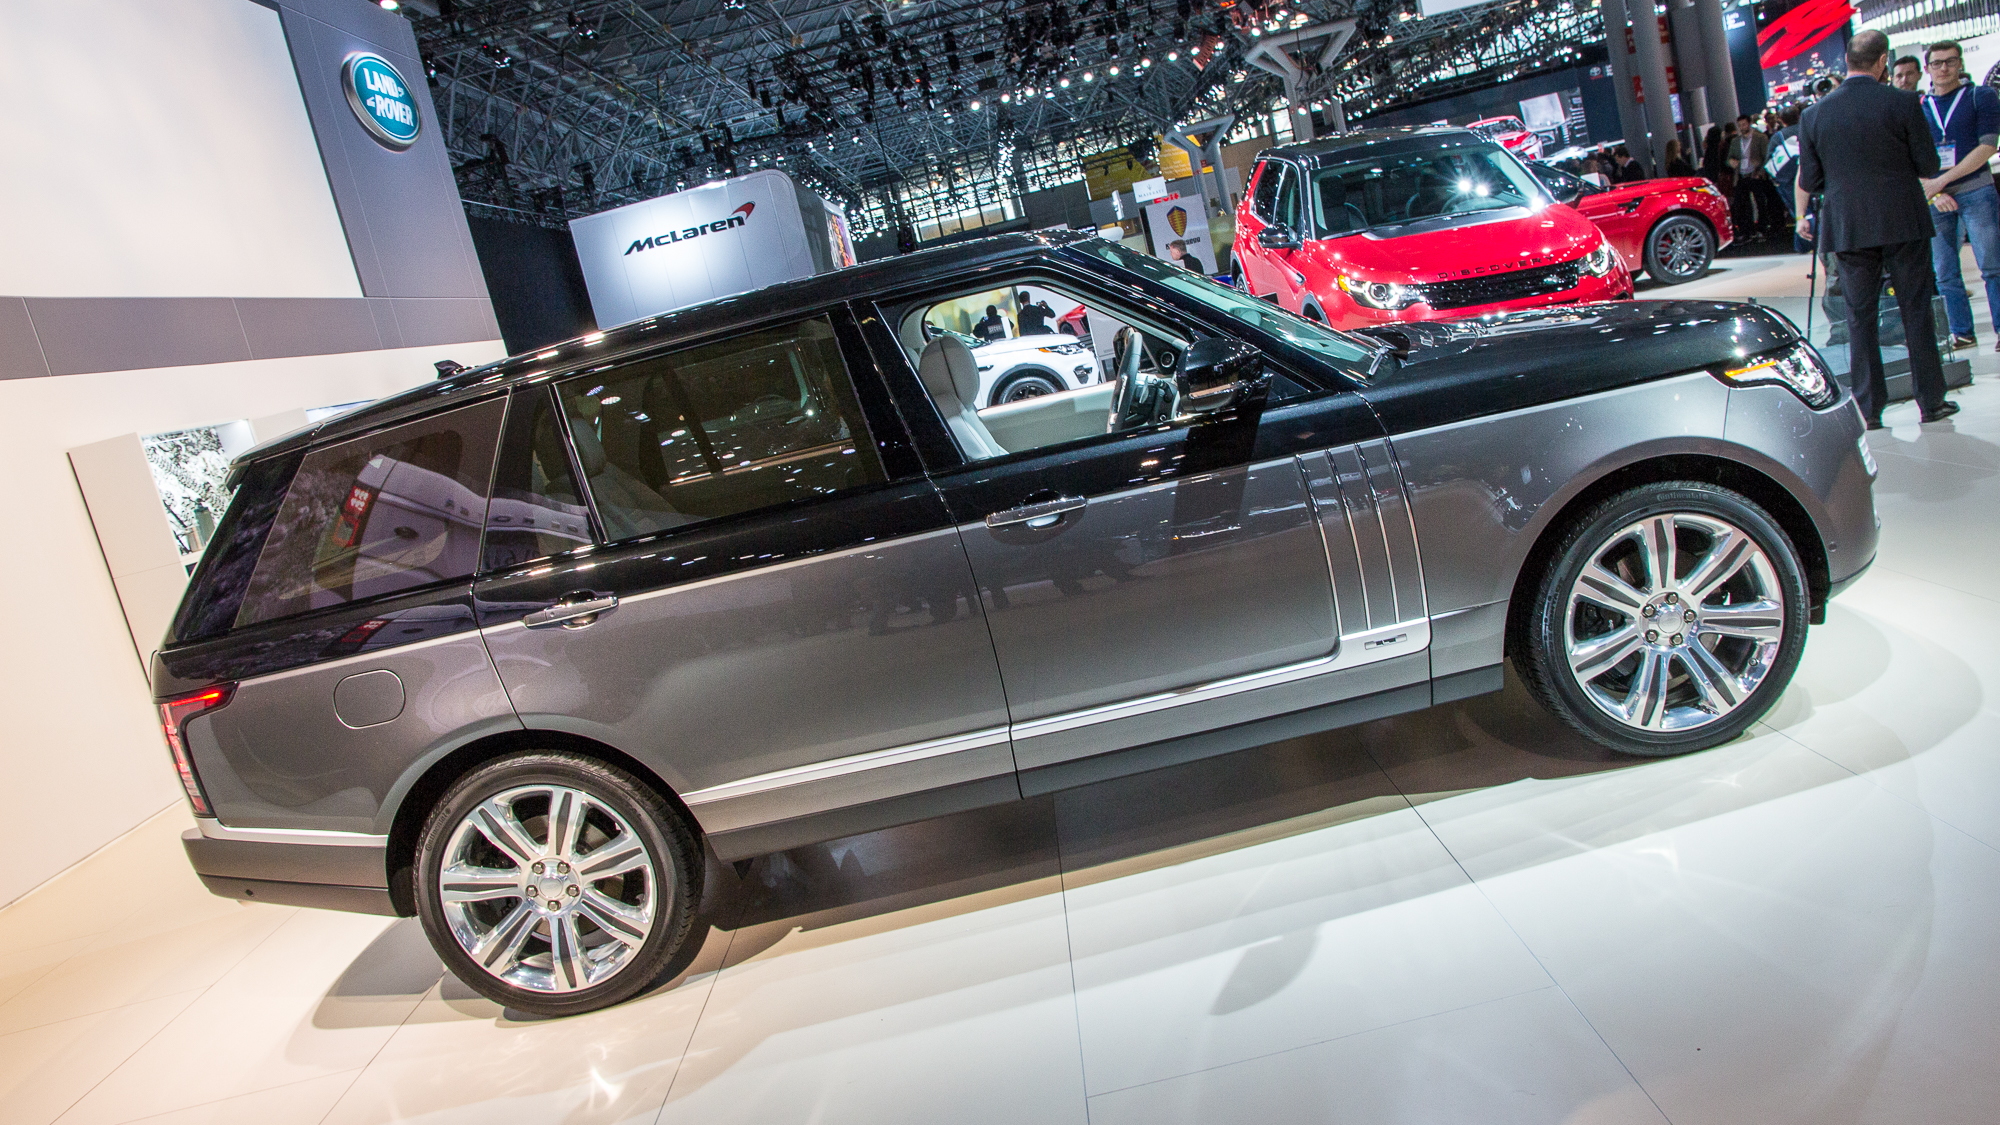 Range Rover SVAutobiography, 2015 New York Auto Show